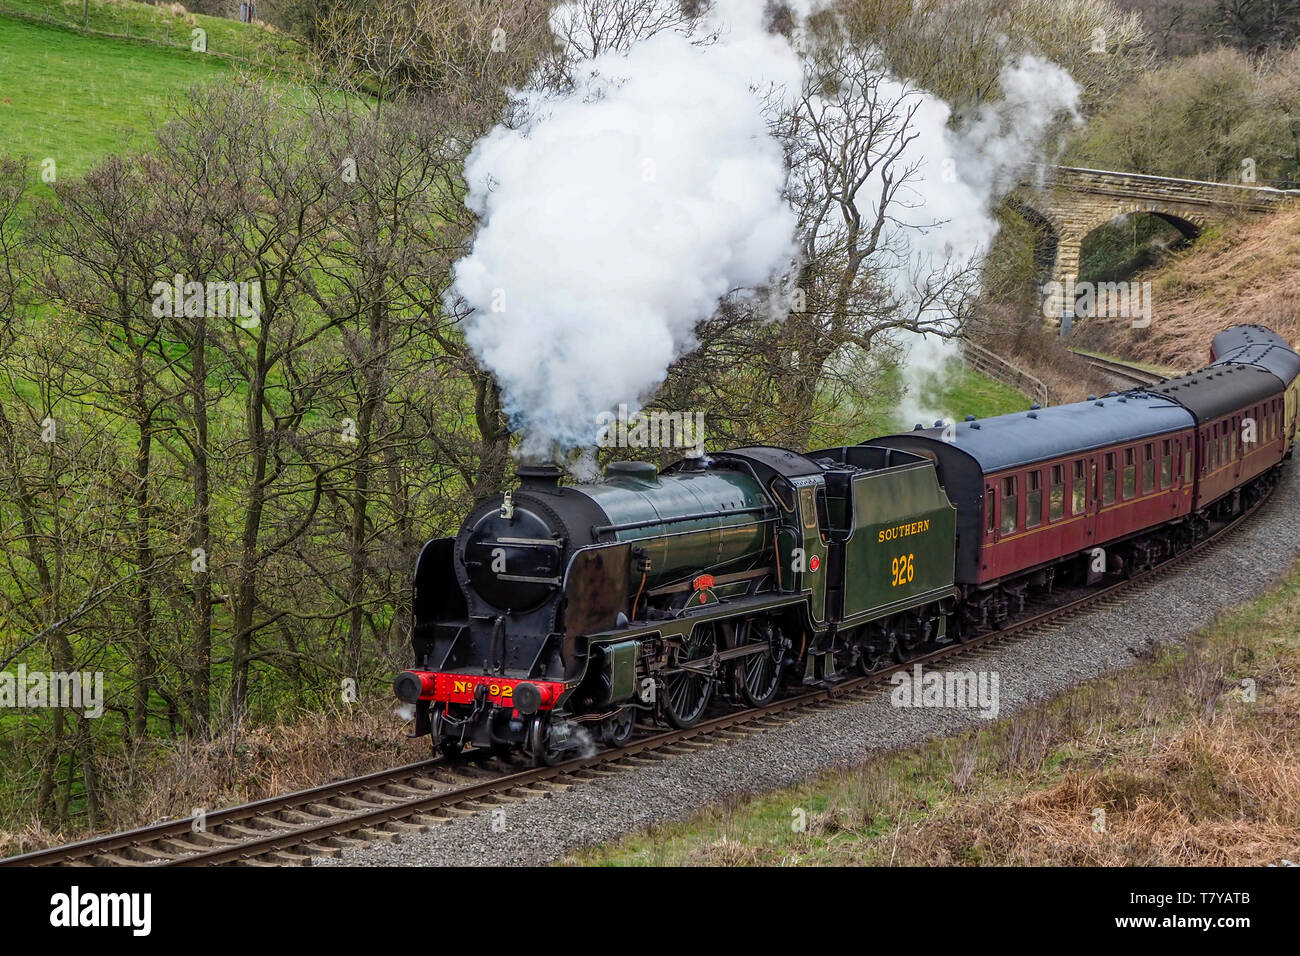 SR No. 926 “Repton“ at Darnholme, North Yorkshire Moors Railway Stock Photo